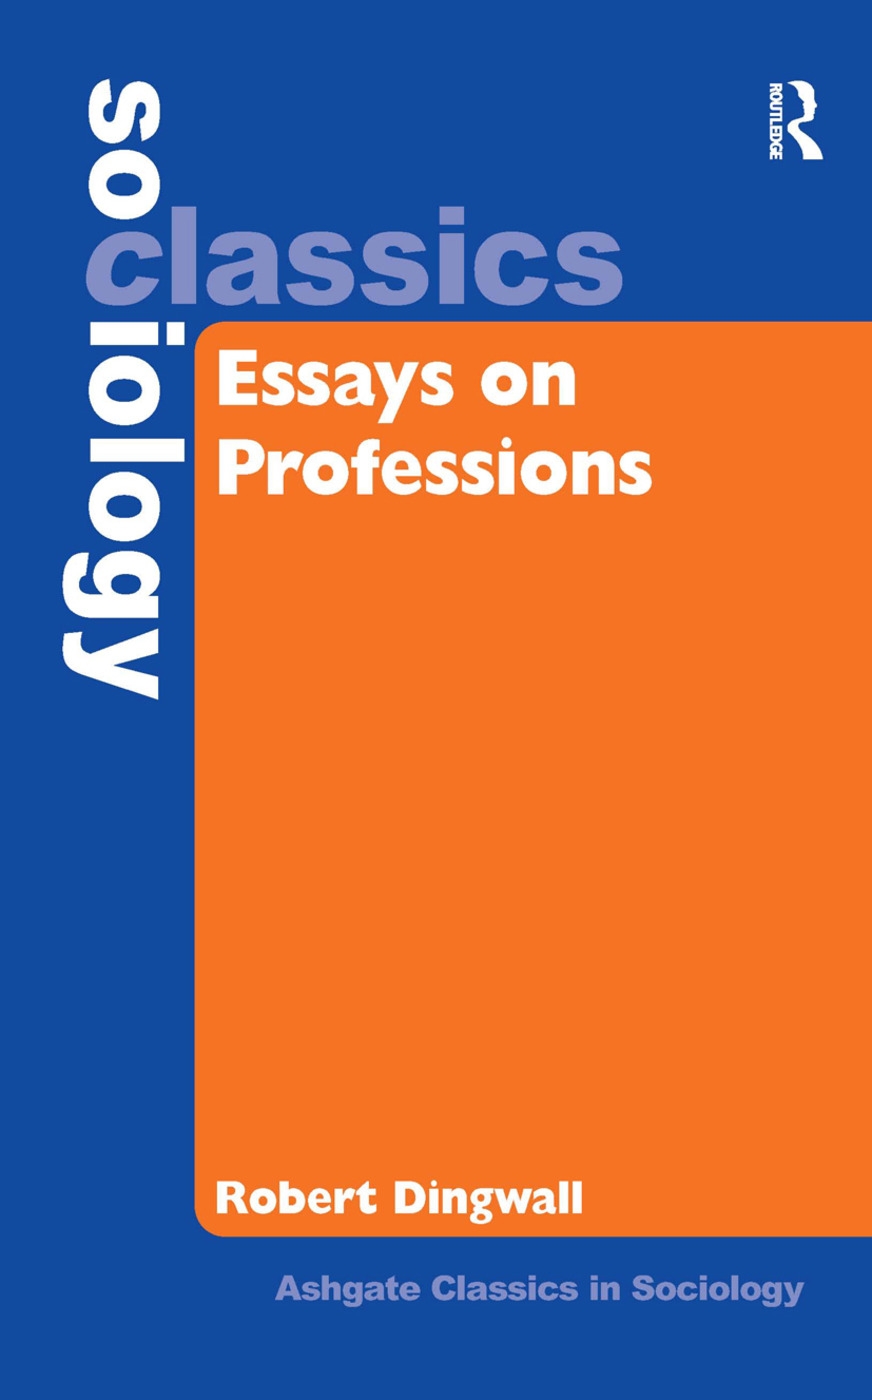 Essays on Professions